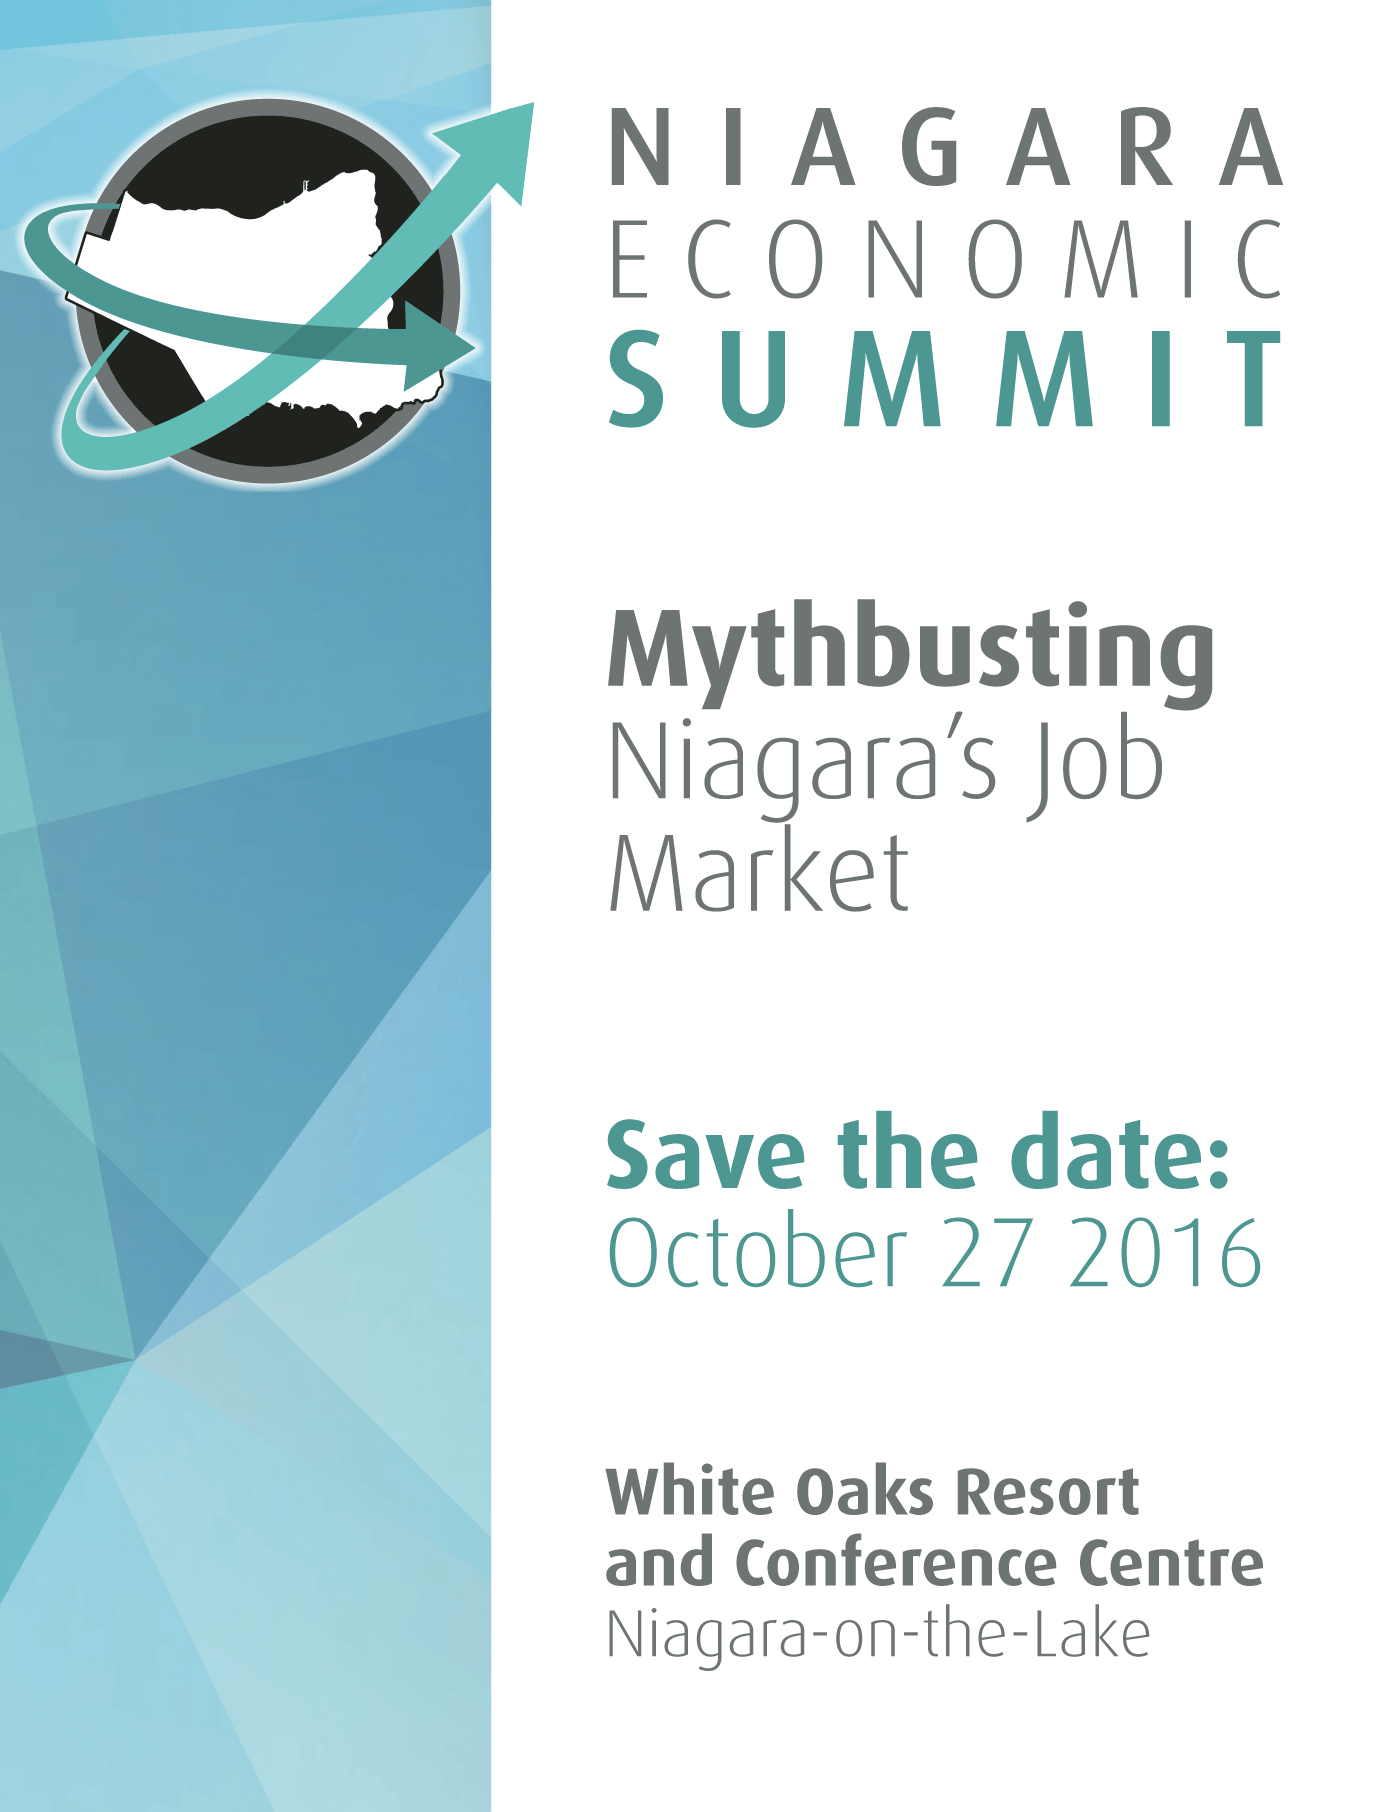 Niagara Economic Summit - Mythbusting Niagara's Job Market - Save the Date: October 27, 2016 - White Oaks Resort and Conference Centre, Niagara-on-the-Lake